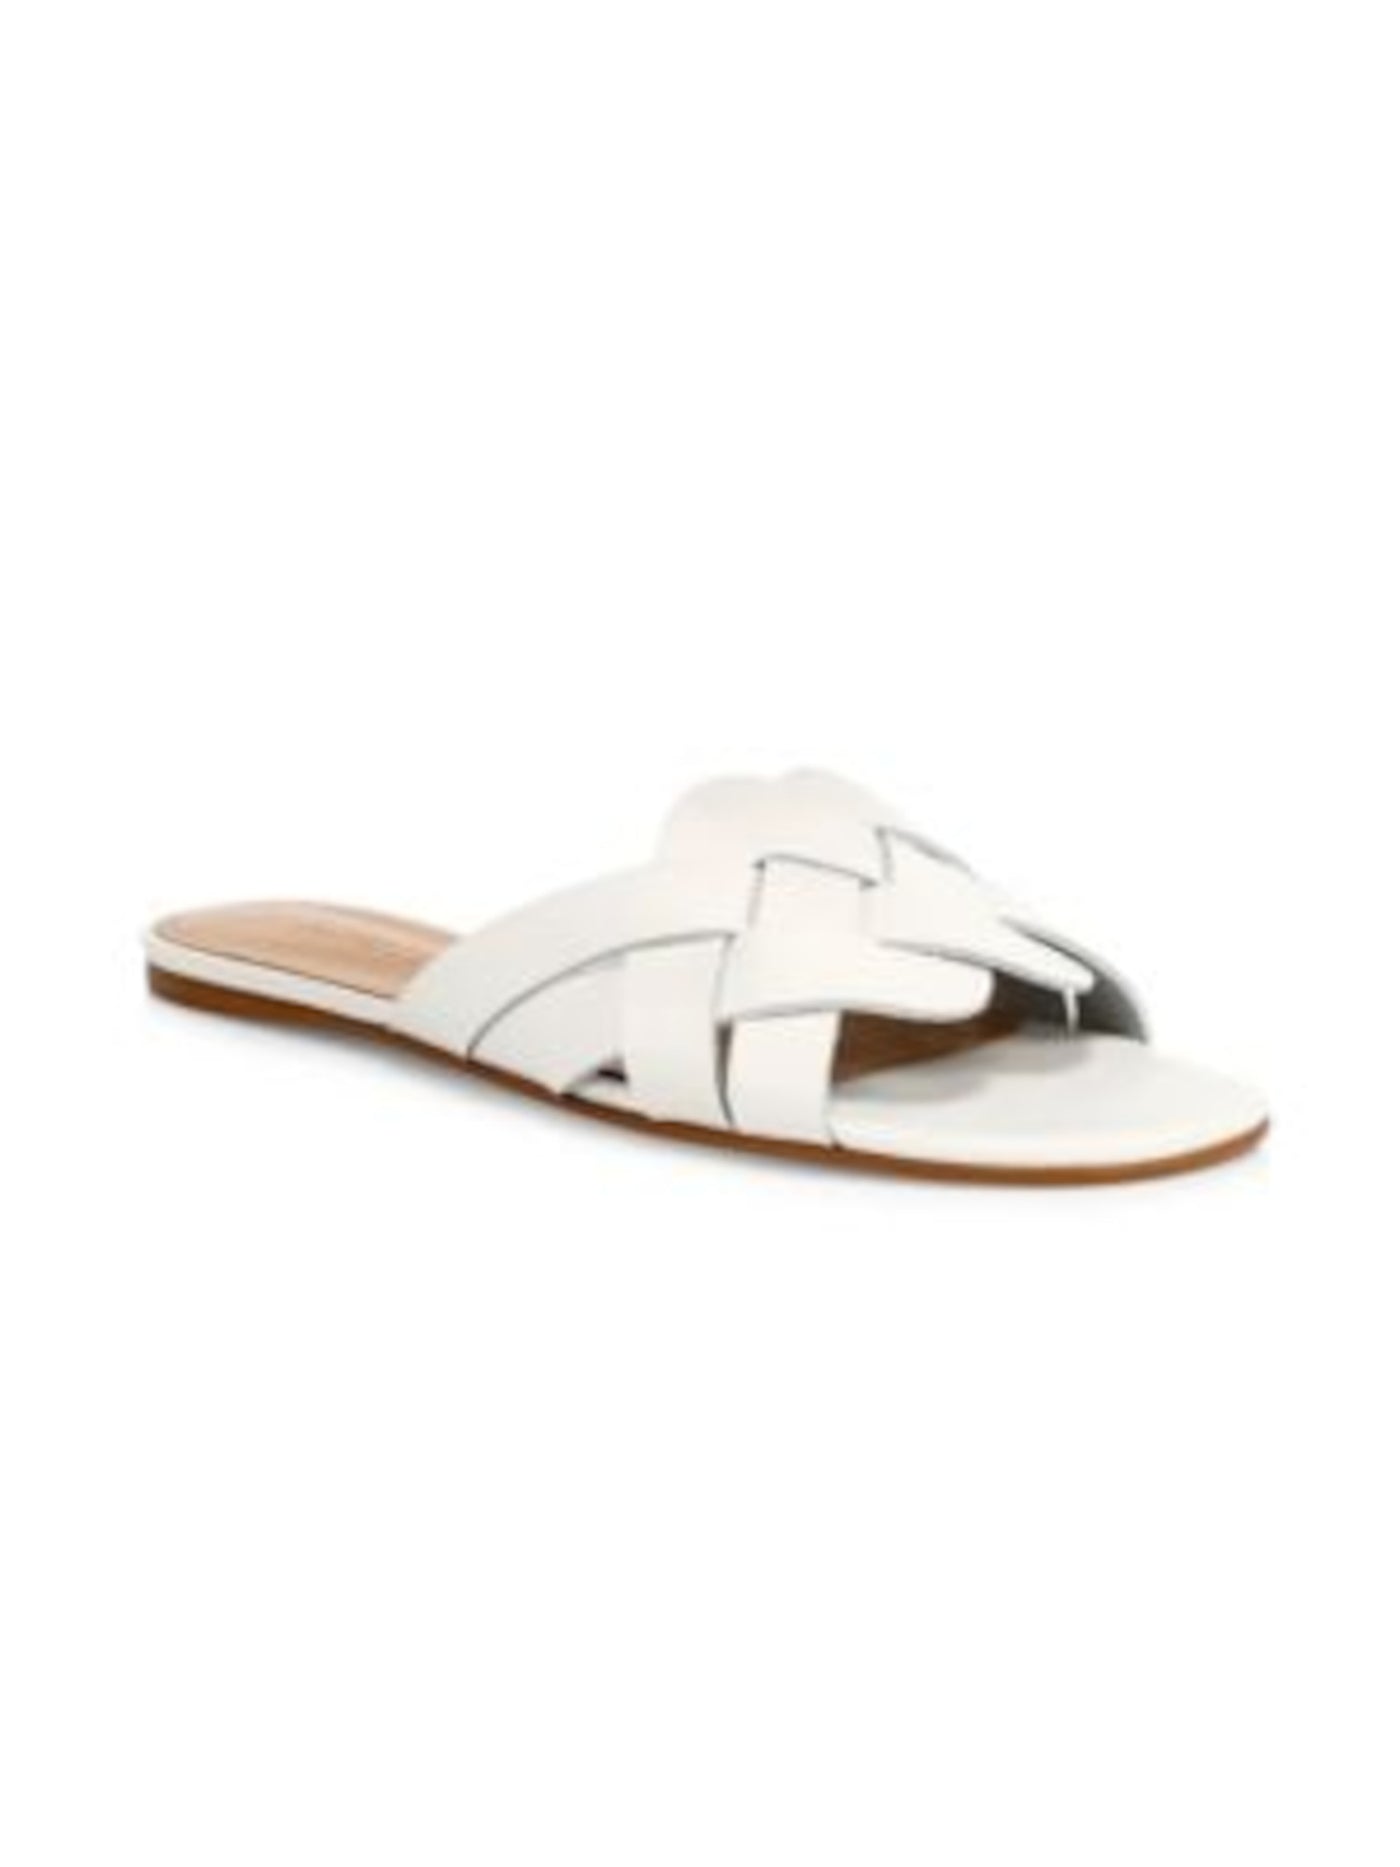 SCHUTZ Womens White Braided Tari Round Toe Slip On Leather Slide Sandals 6 B